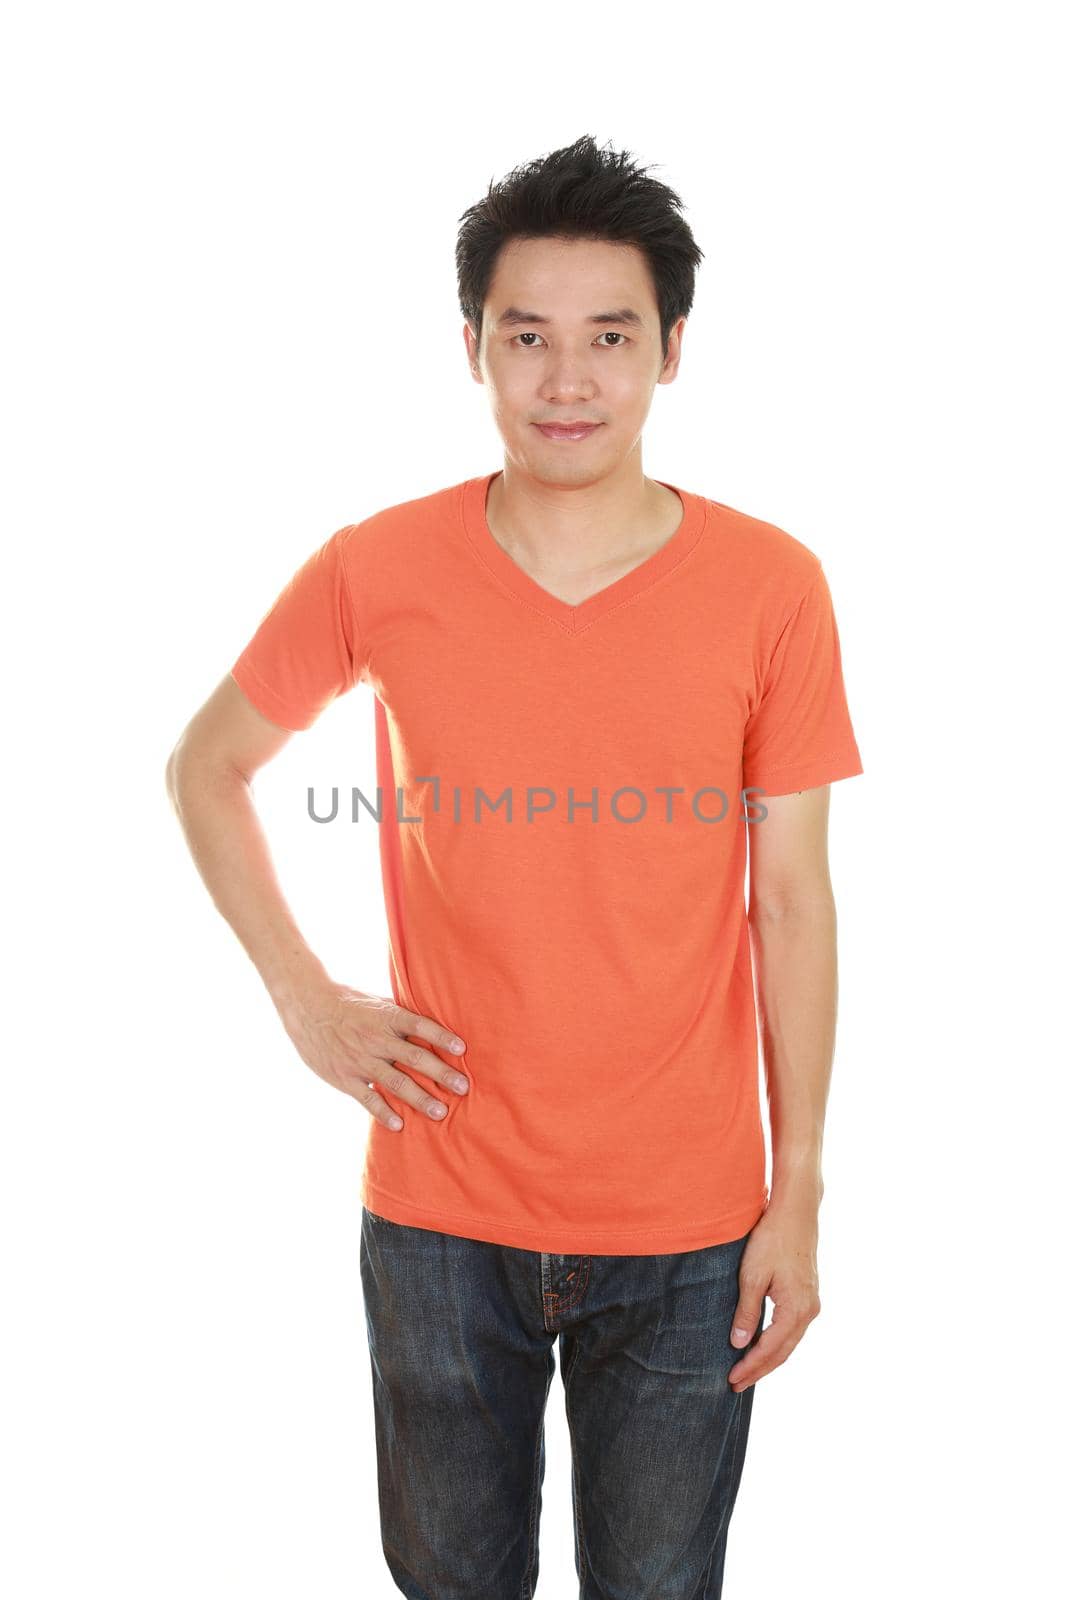 man with blank orange t-shirt isolated on white background